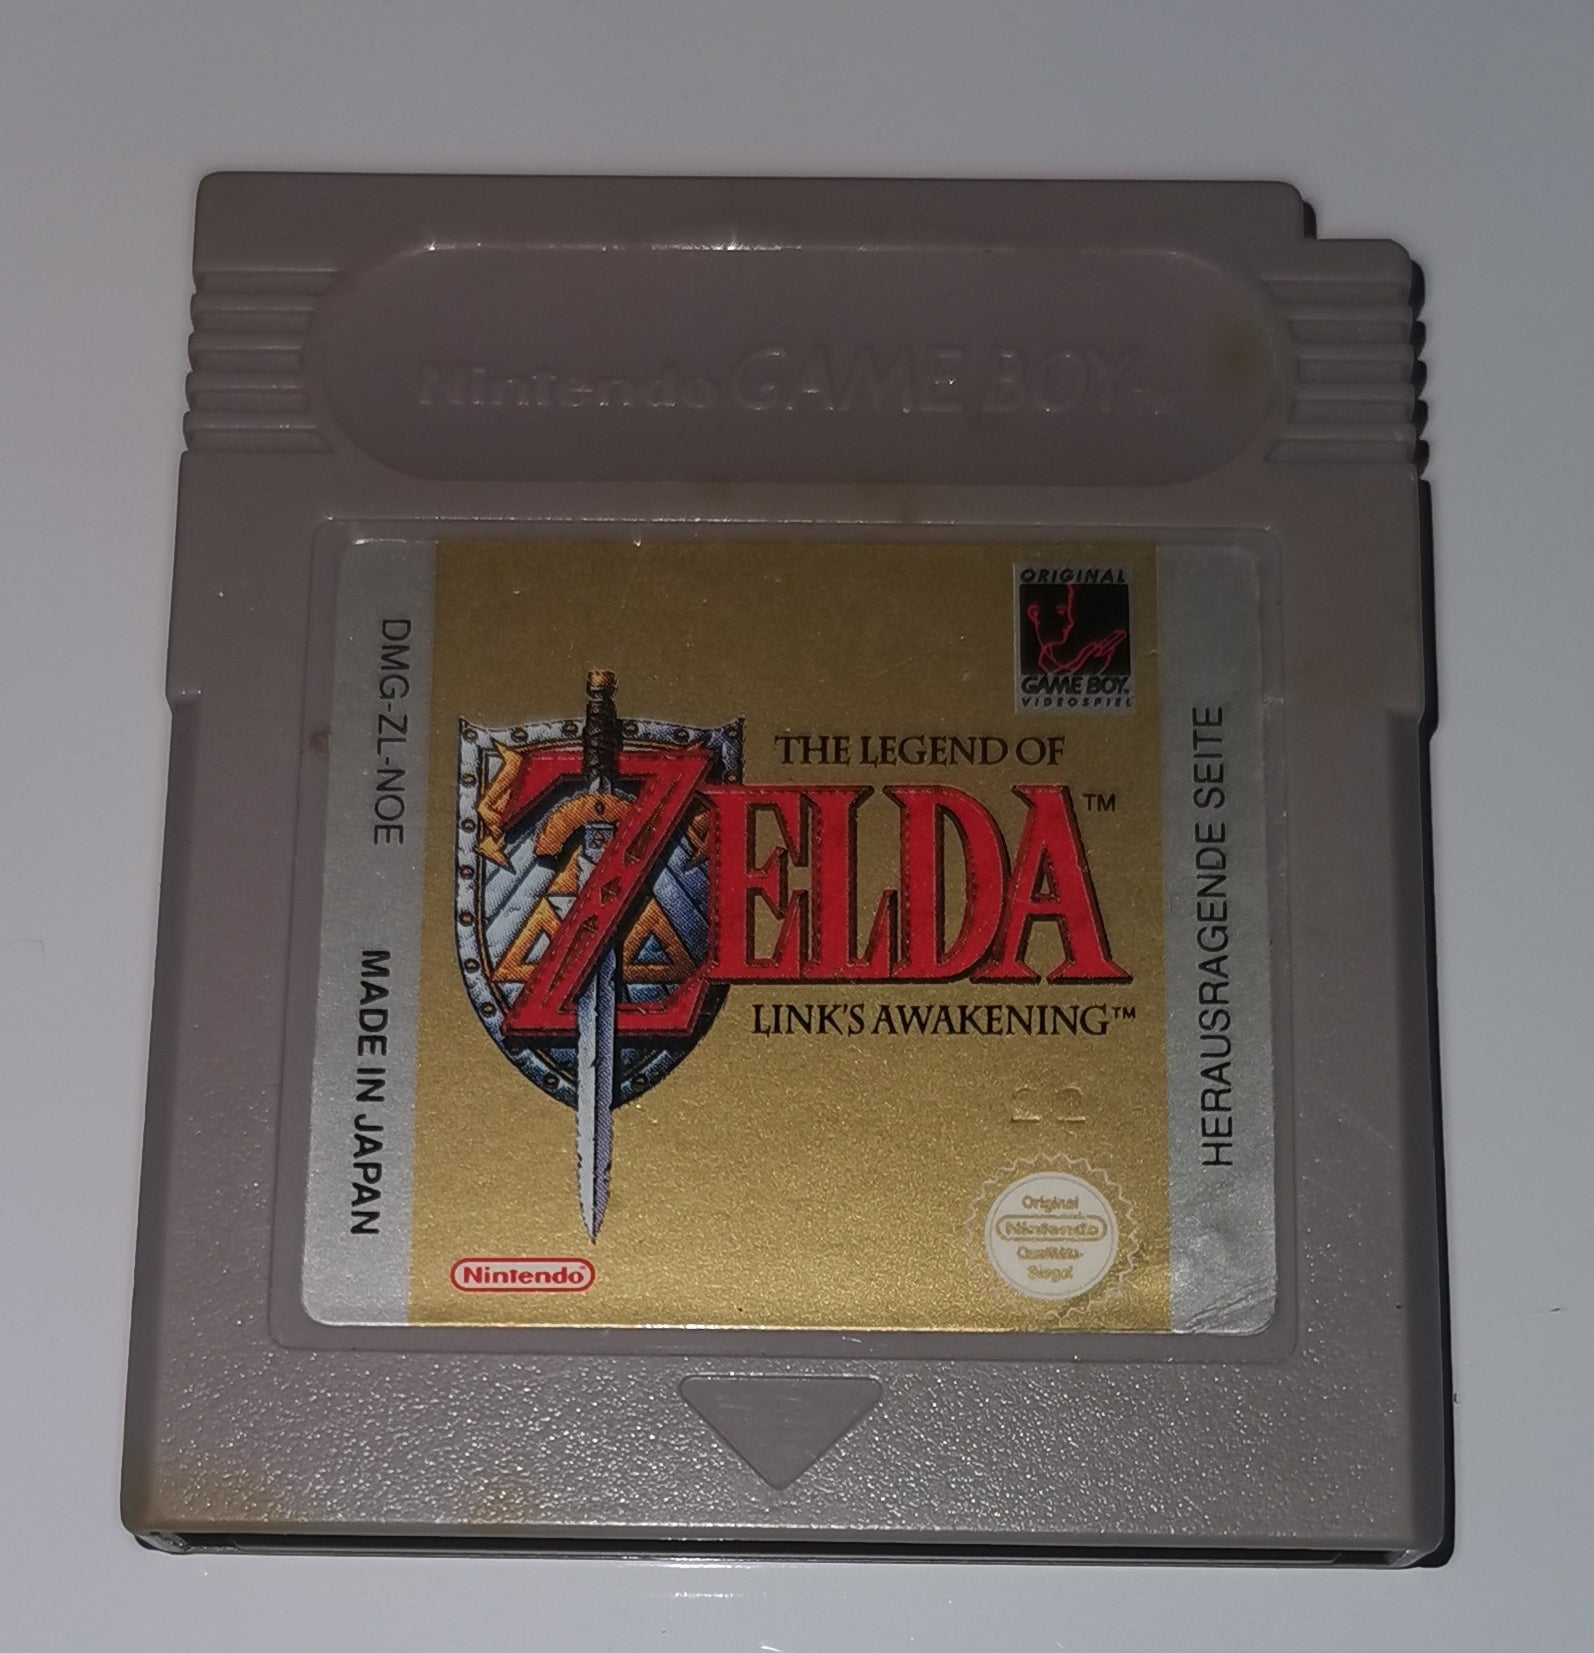 The Legend of Zelda Links Awakening (Game Boy) [Akzeptabel]